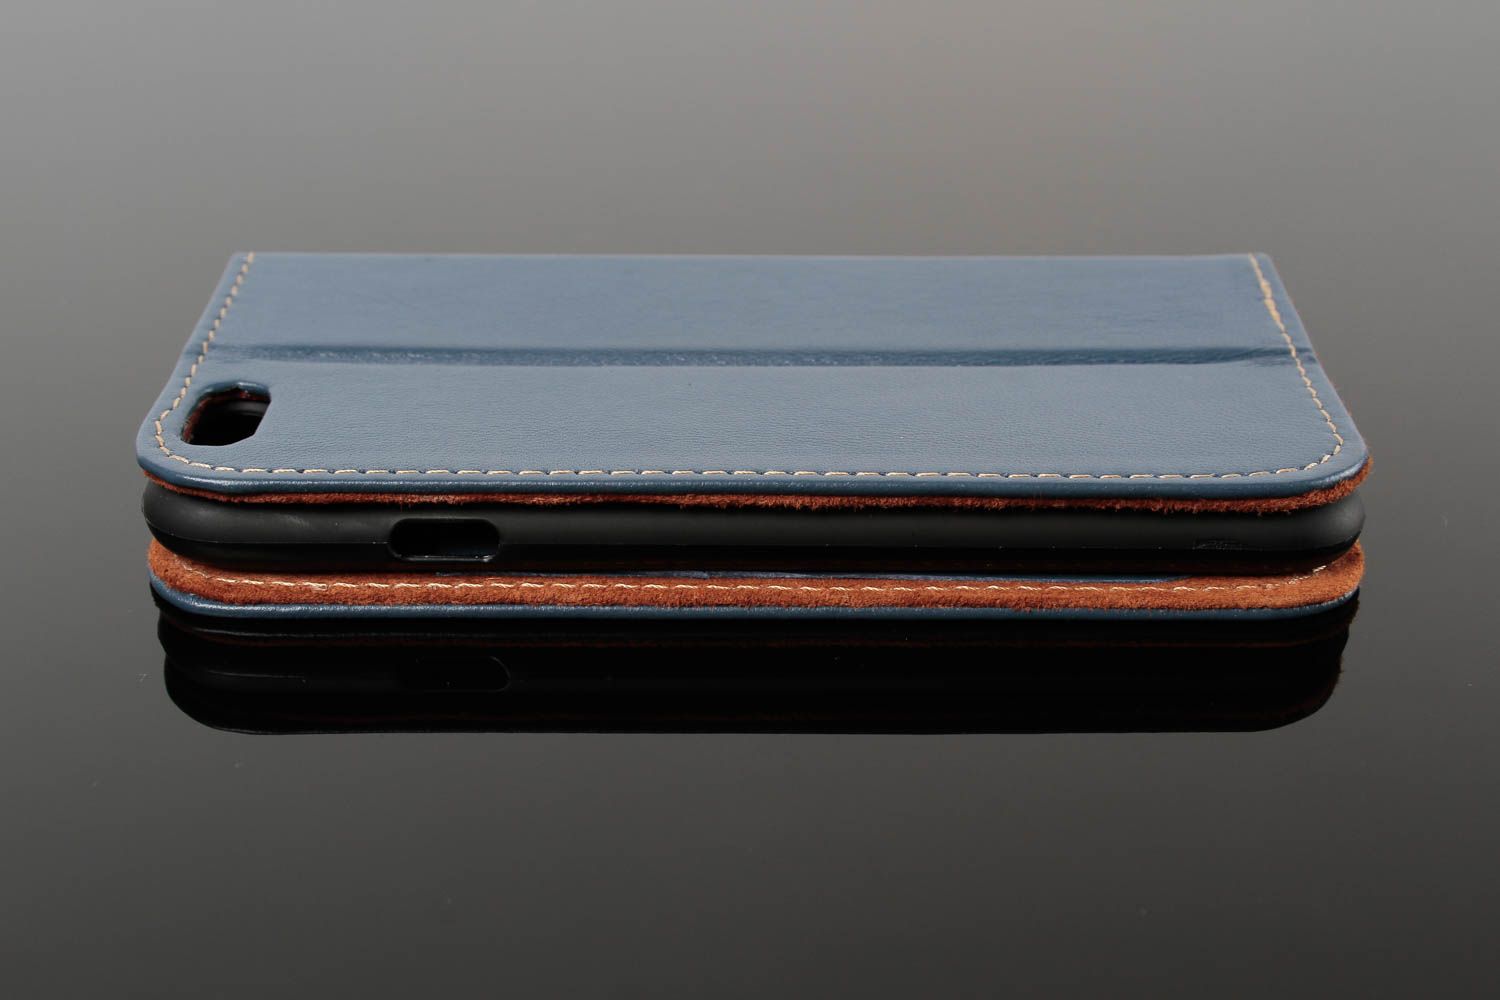 Чехол на телефон хэнд мэйд аксессуар для смартфона кожаный чехол синий фото 3